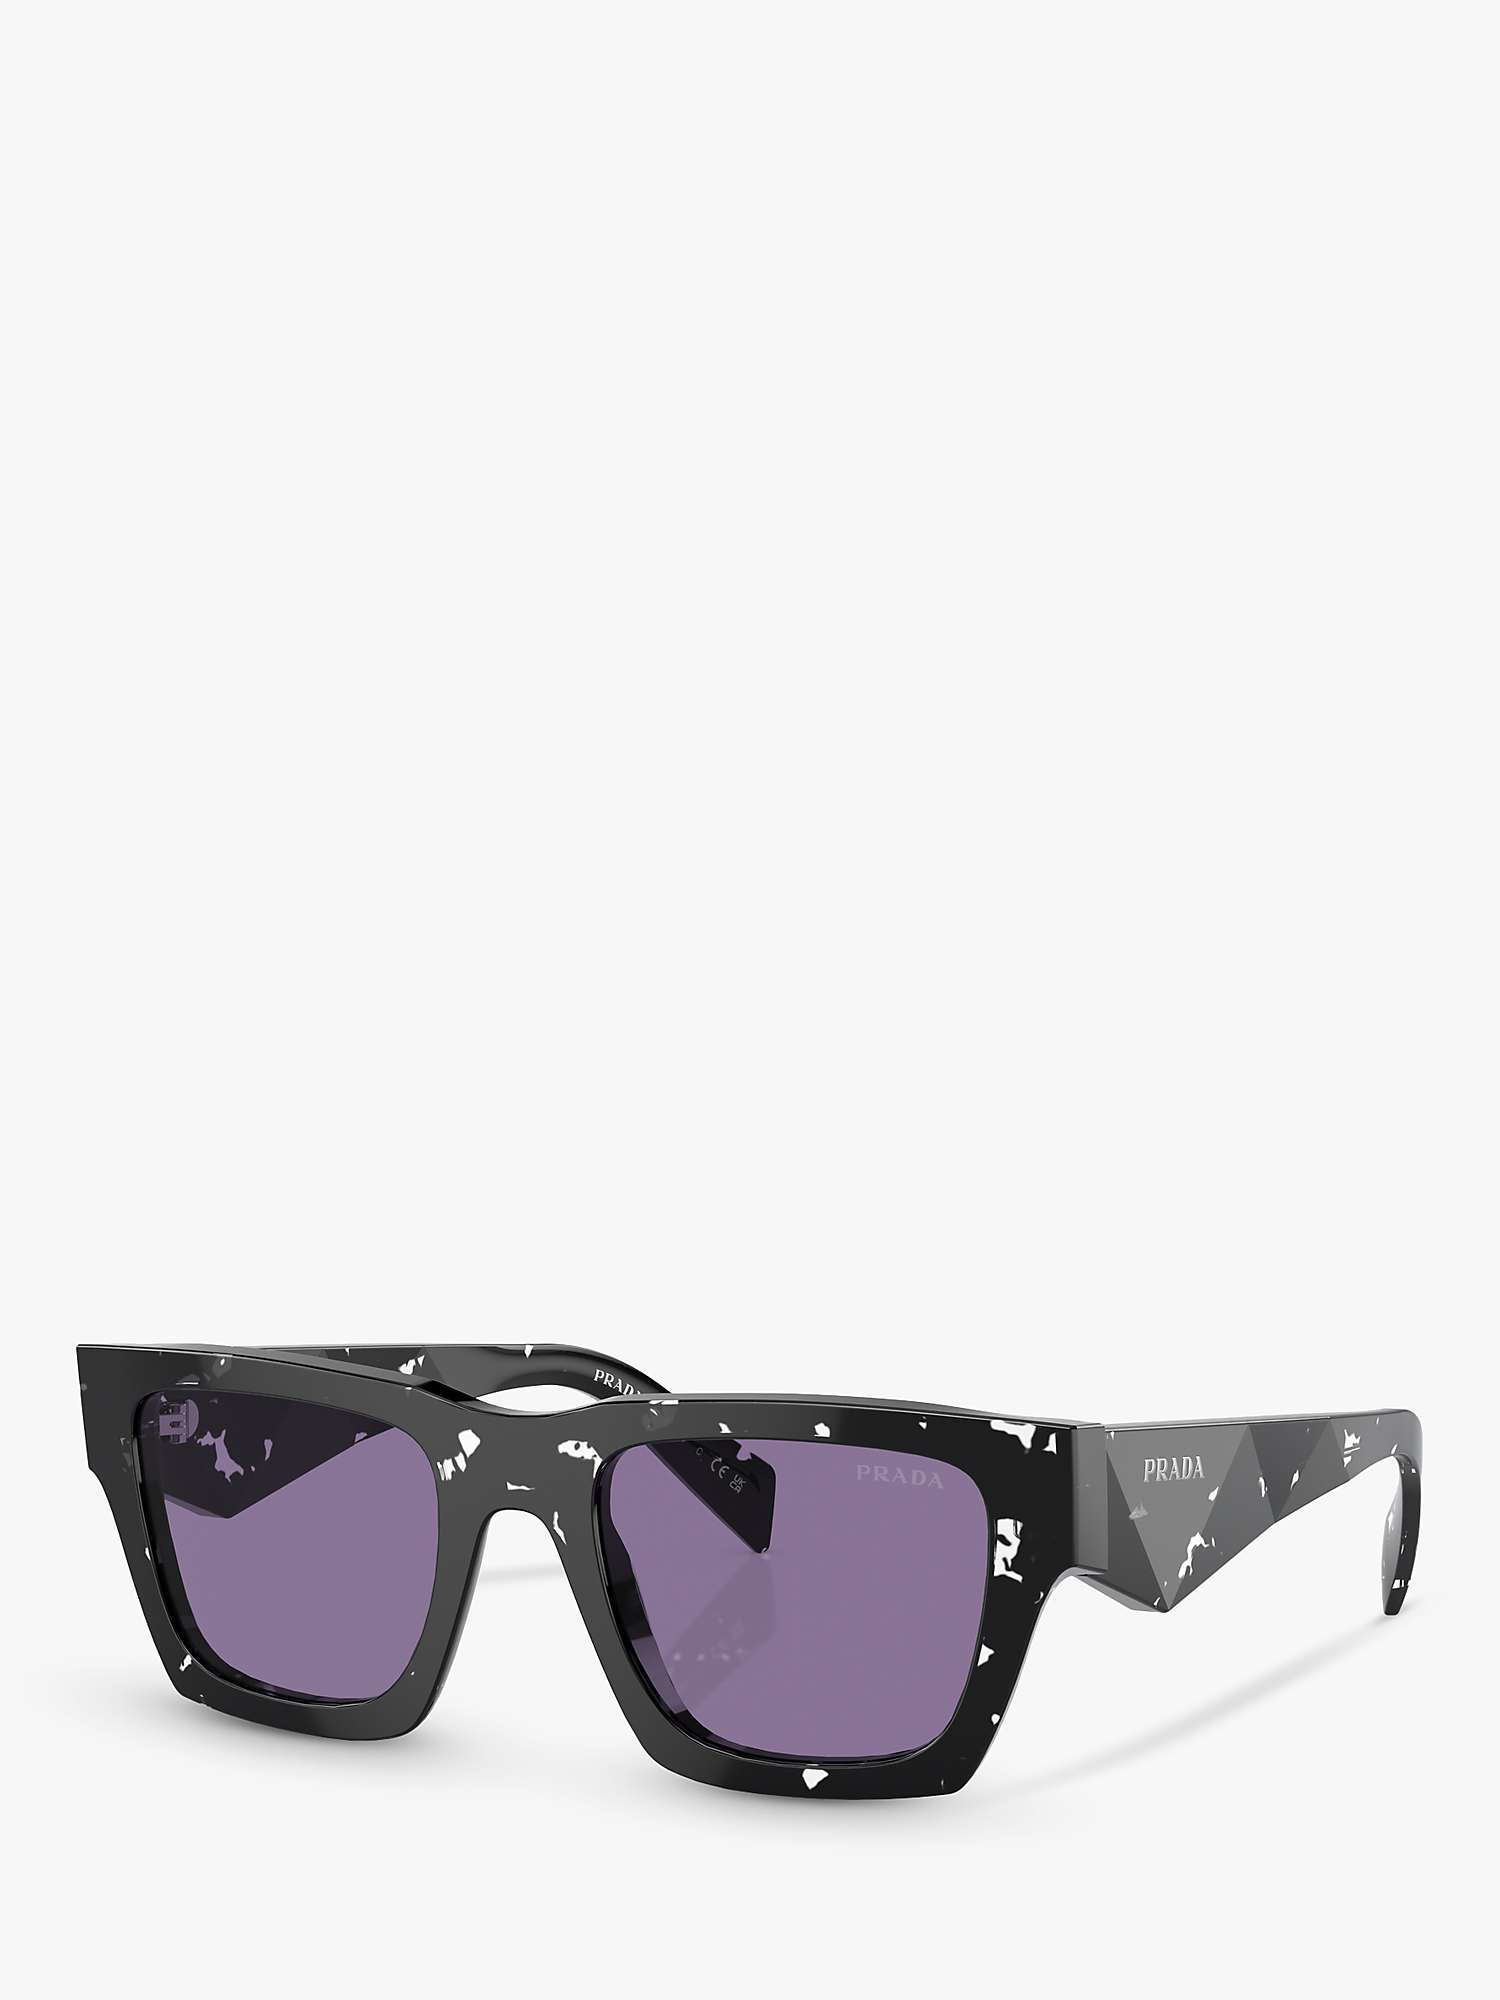 Buy Prada PR A06S Men's Rectangular Sunglasses, Black Tortoise/Violet Online at johnlewis.com